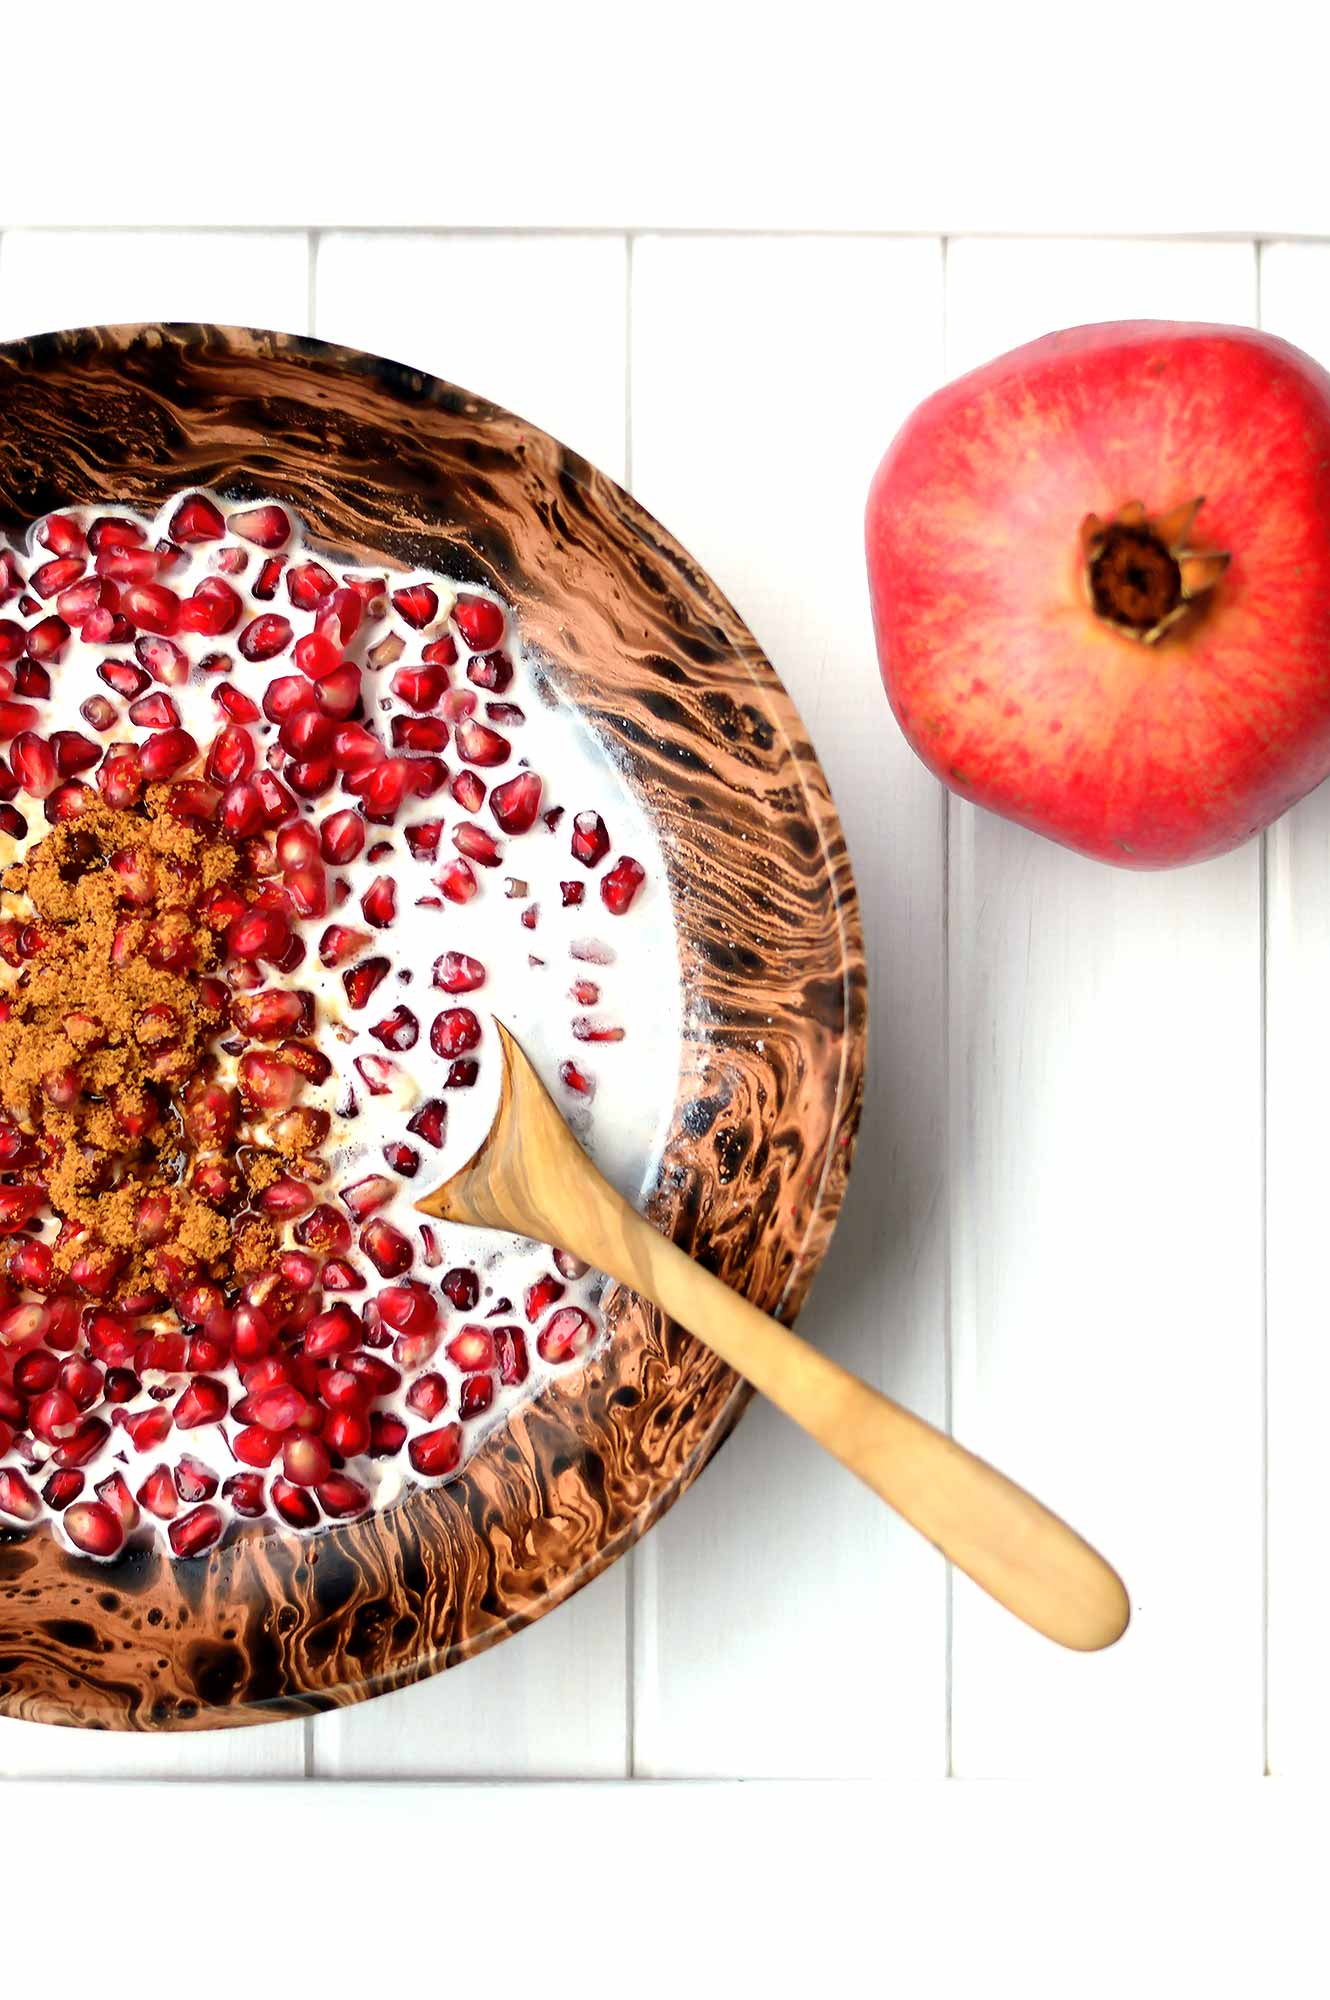 Pomegranate Breakfast Bowl - sweet and refreshing|www.thebrightbird.com 